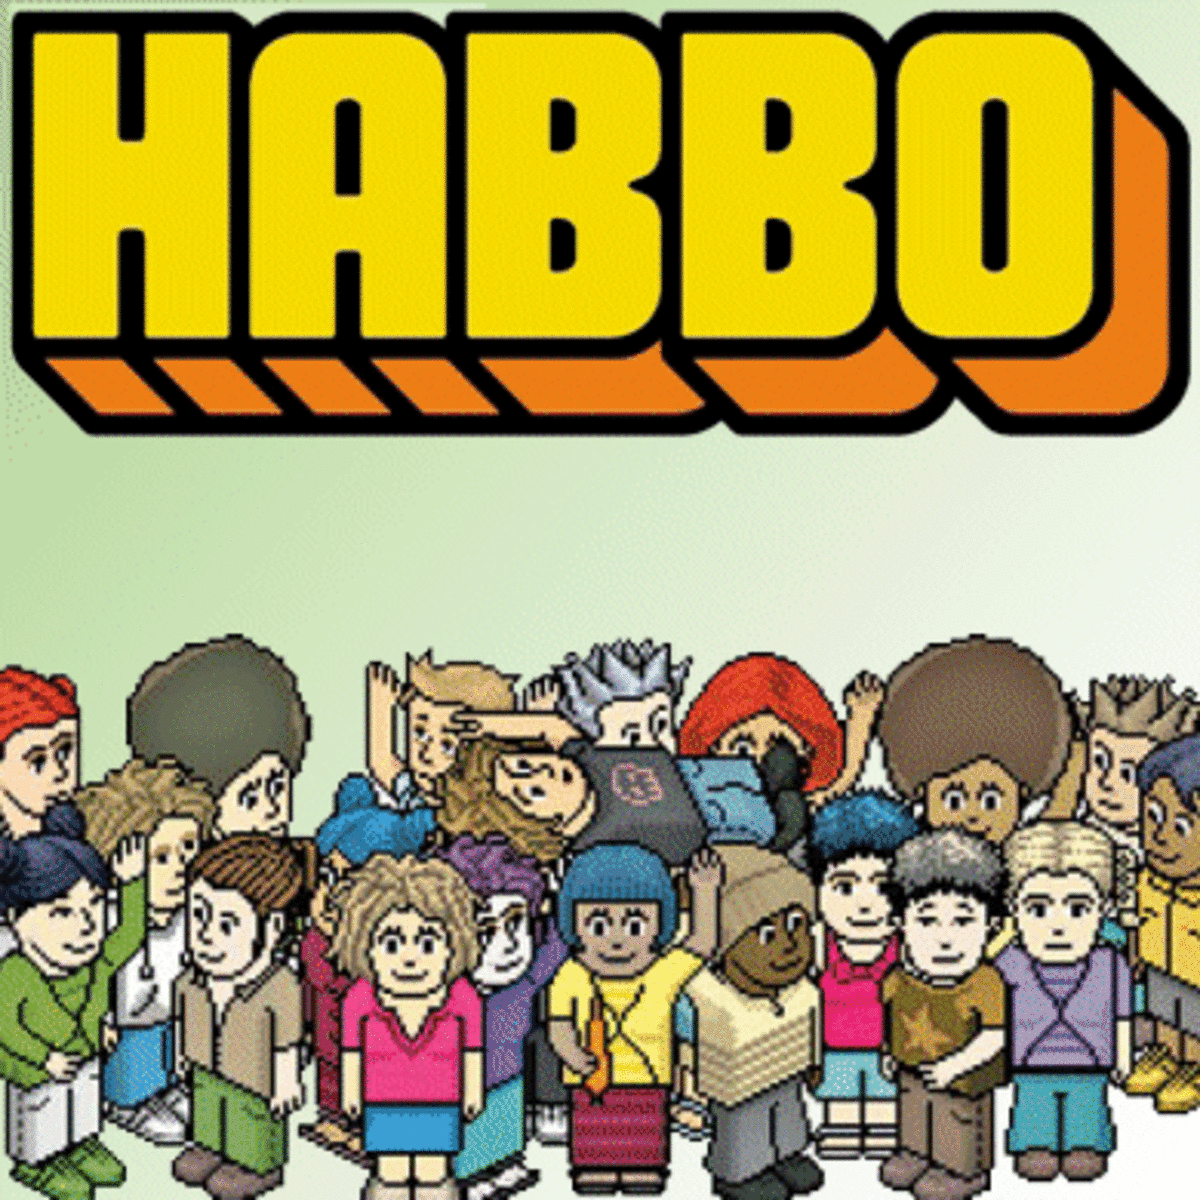 habbo-hotel